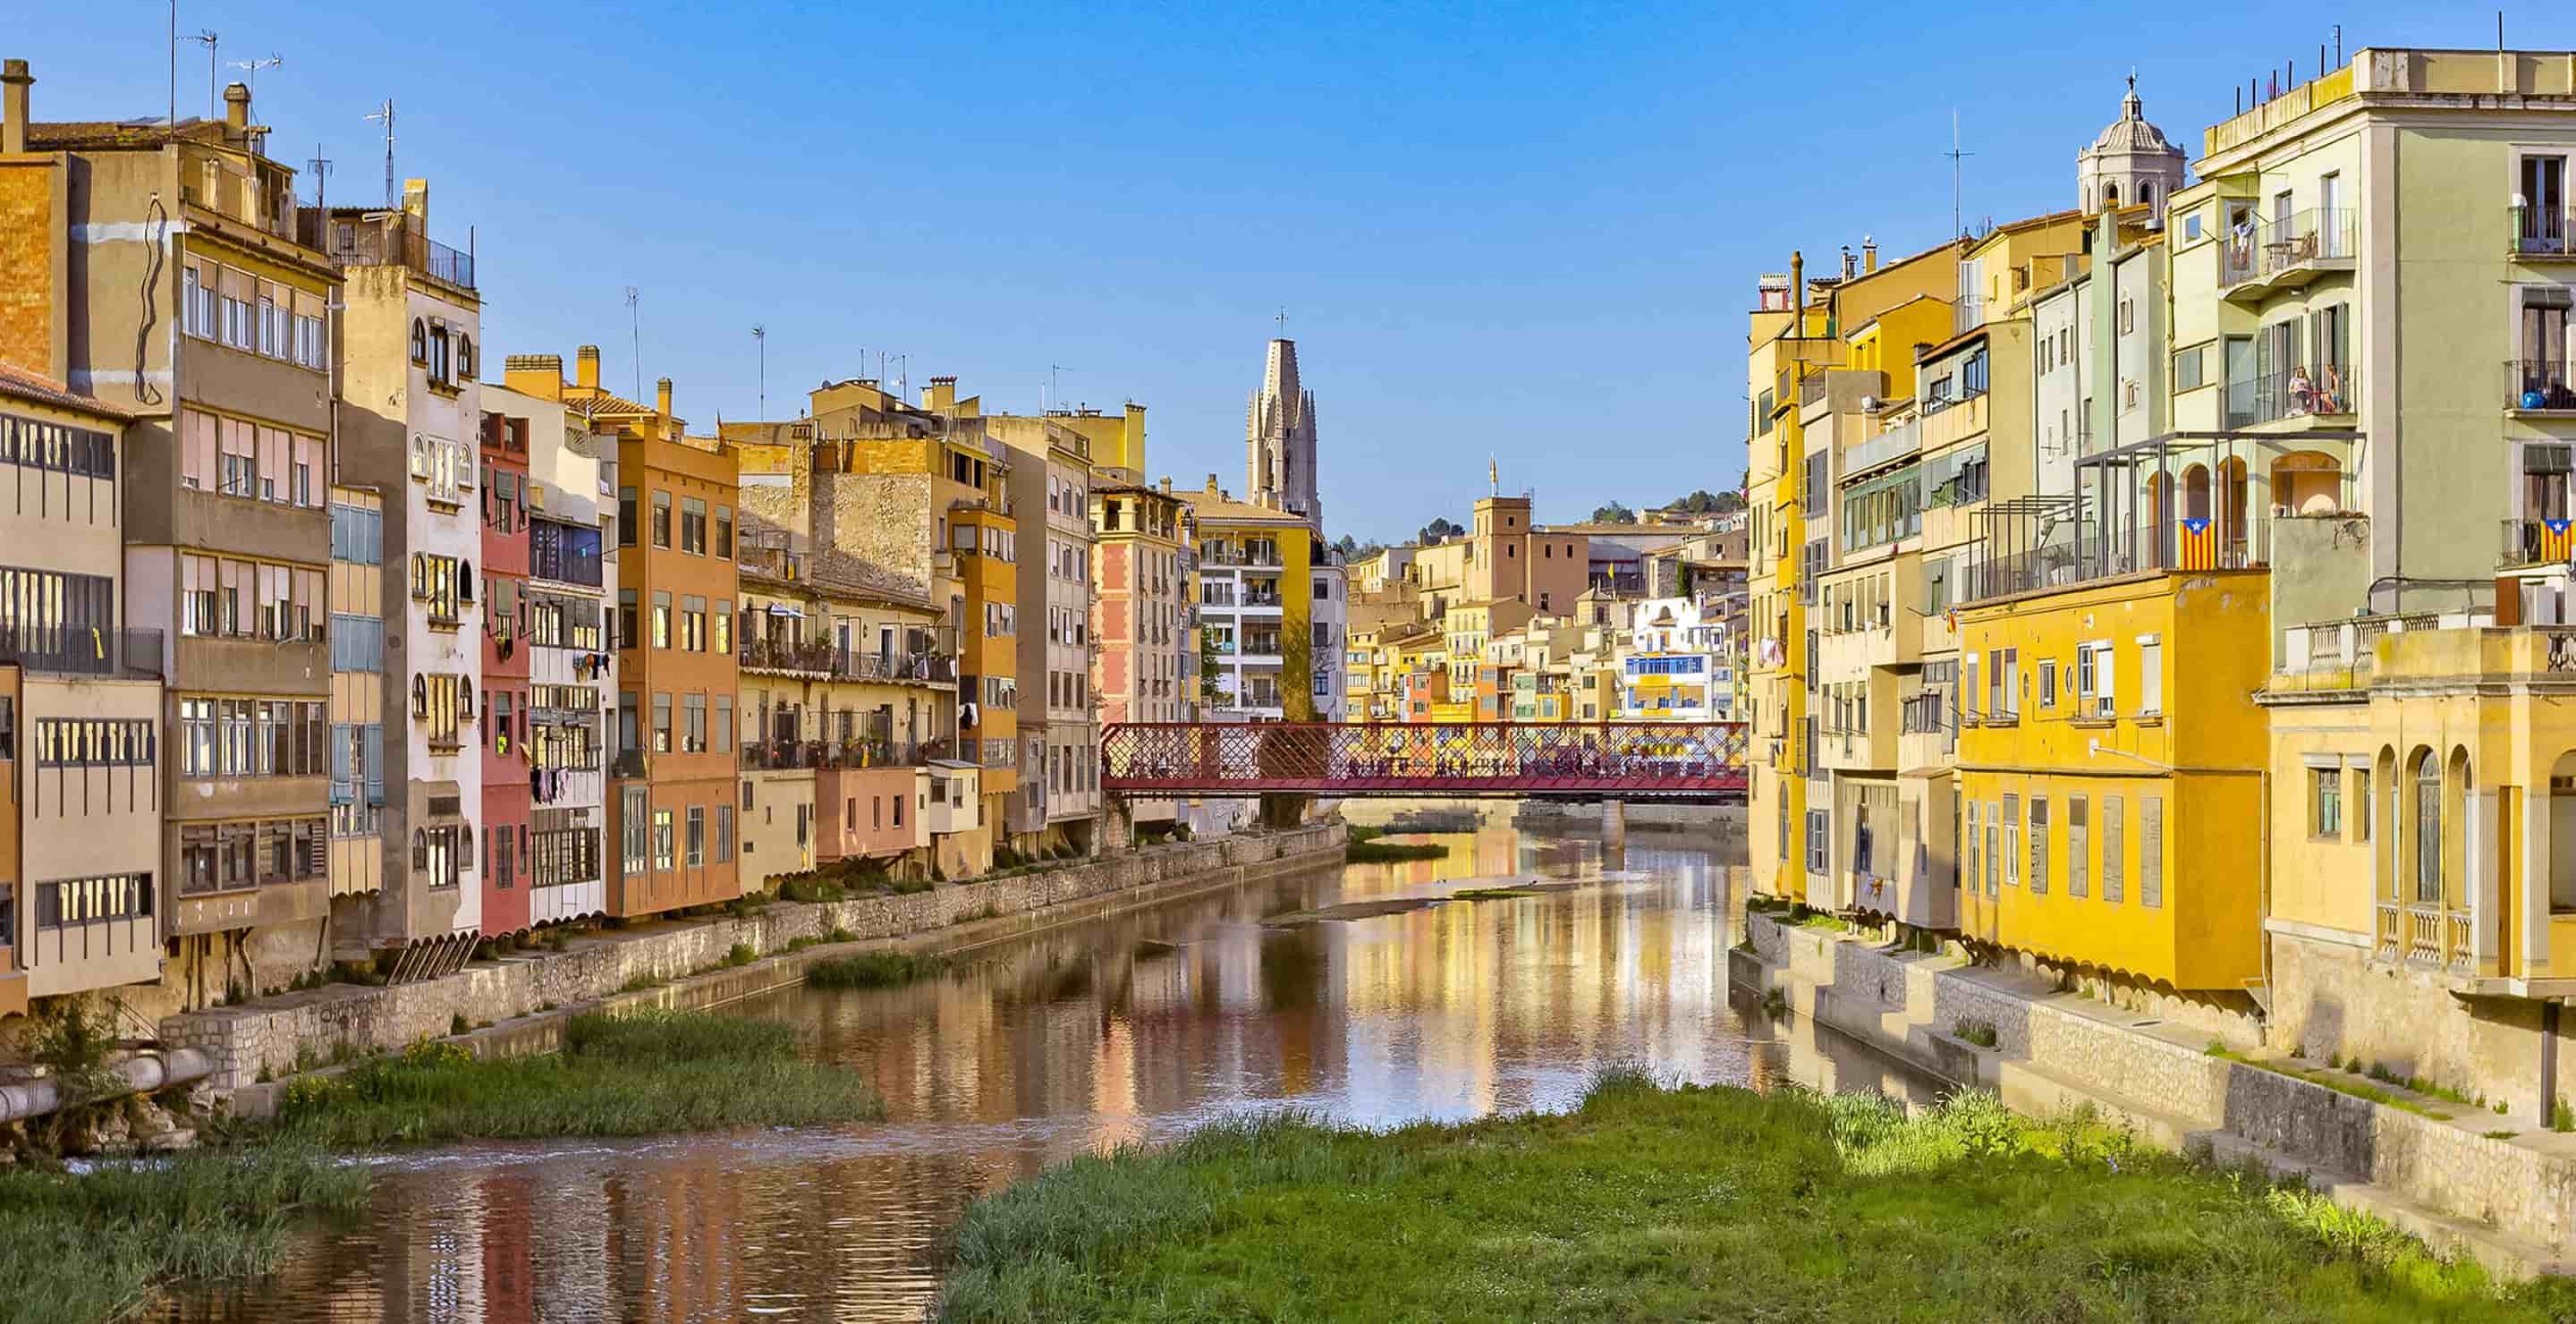 Tren barato Barcelona Girona desde 7€ | Renfe horarios y billetes